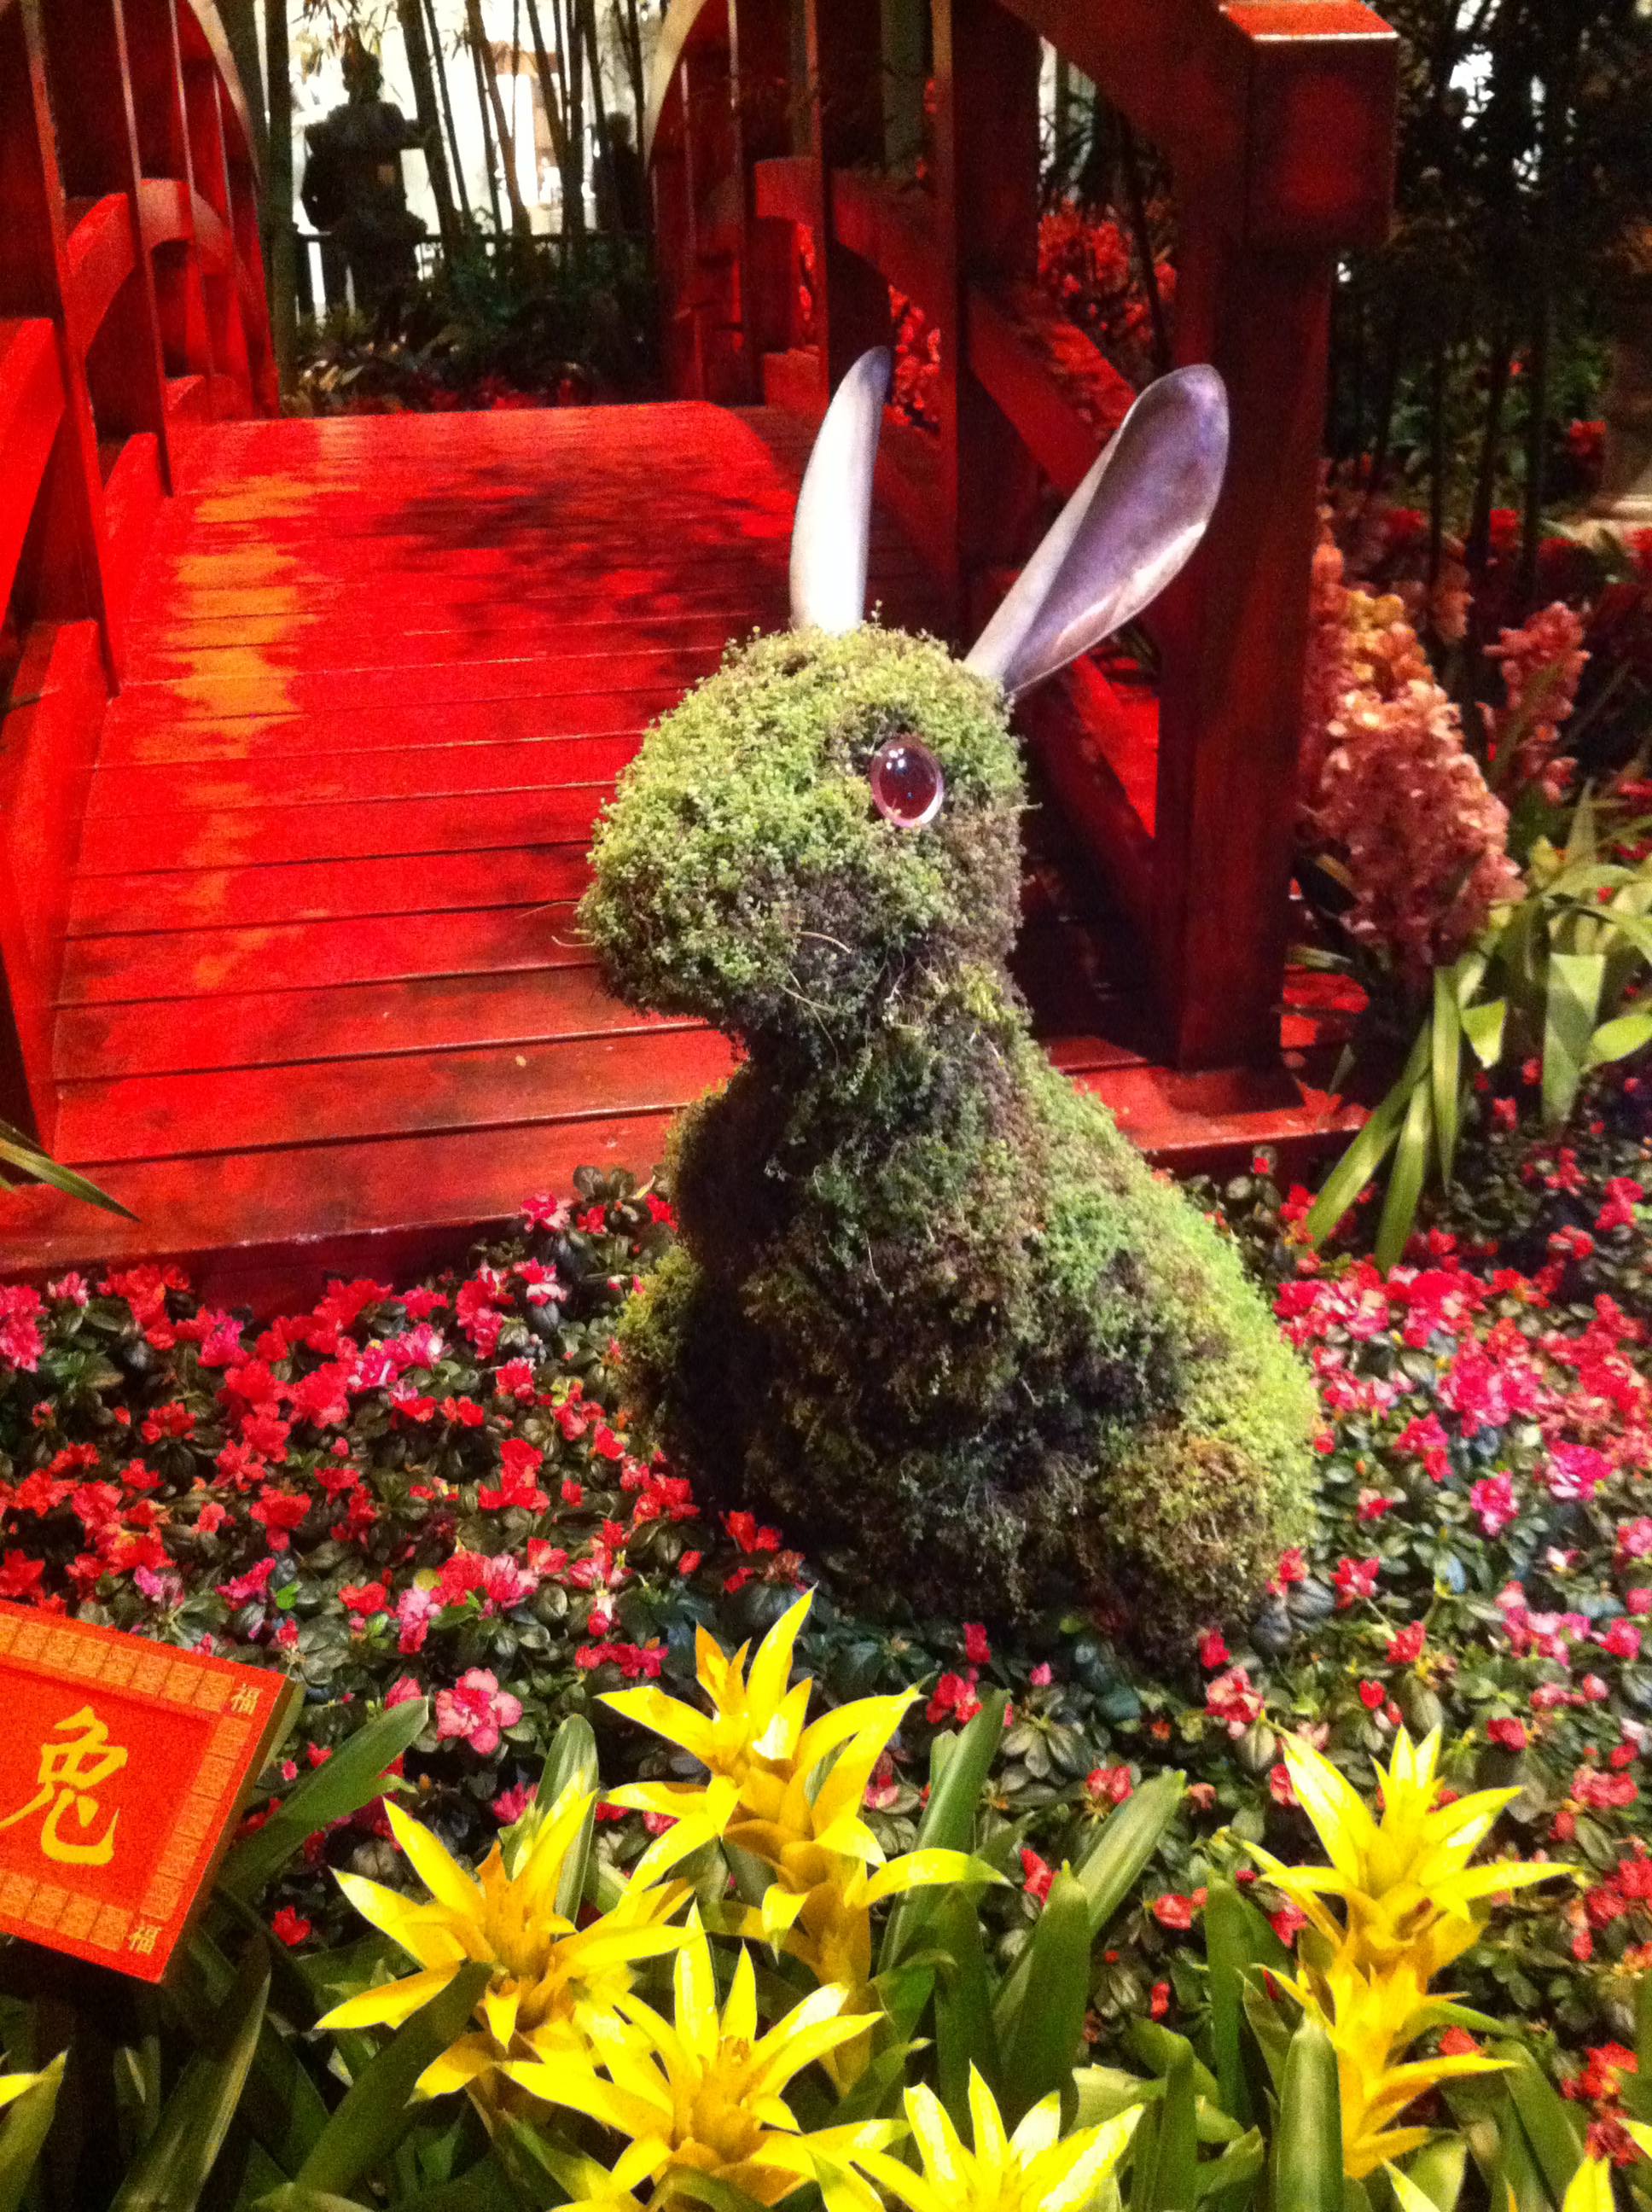 A topiary rabbit.